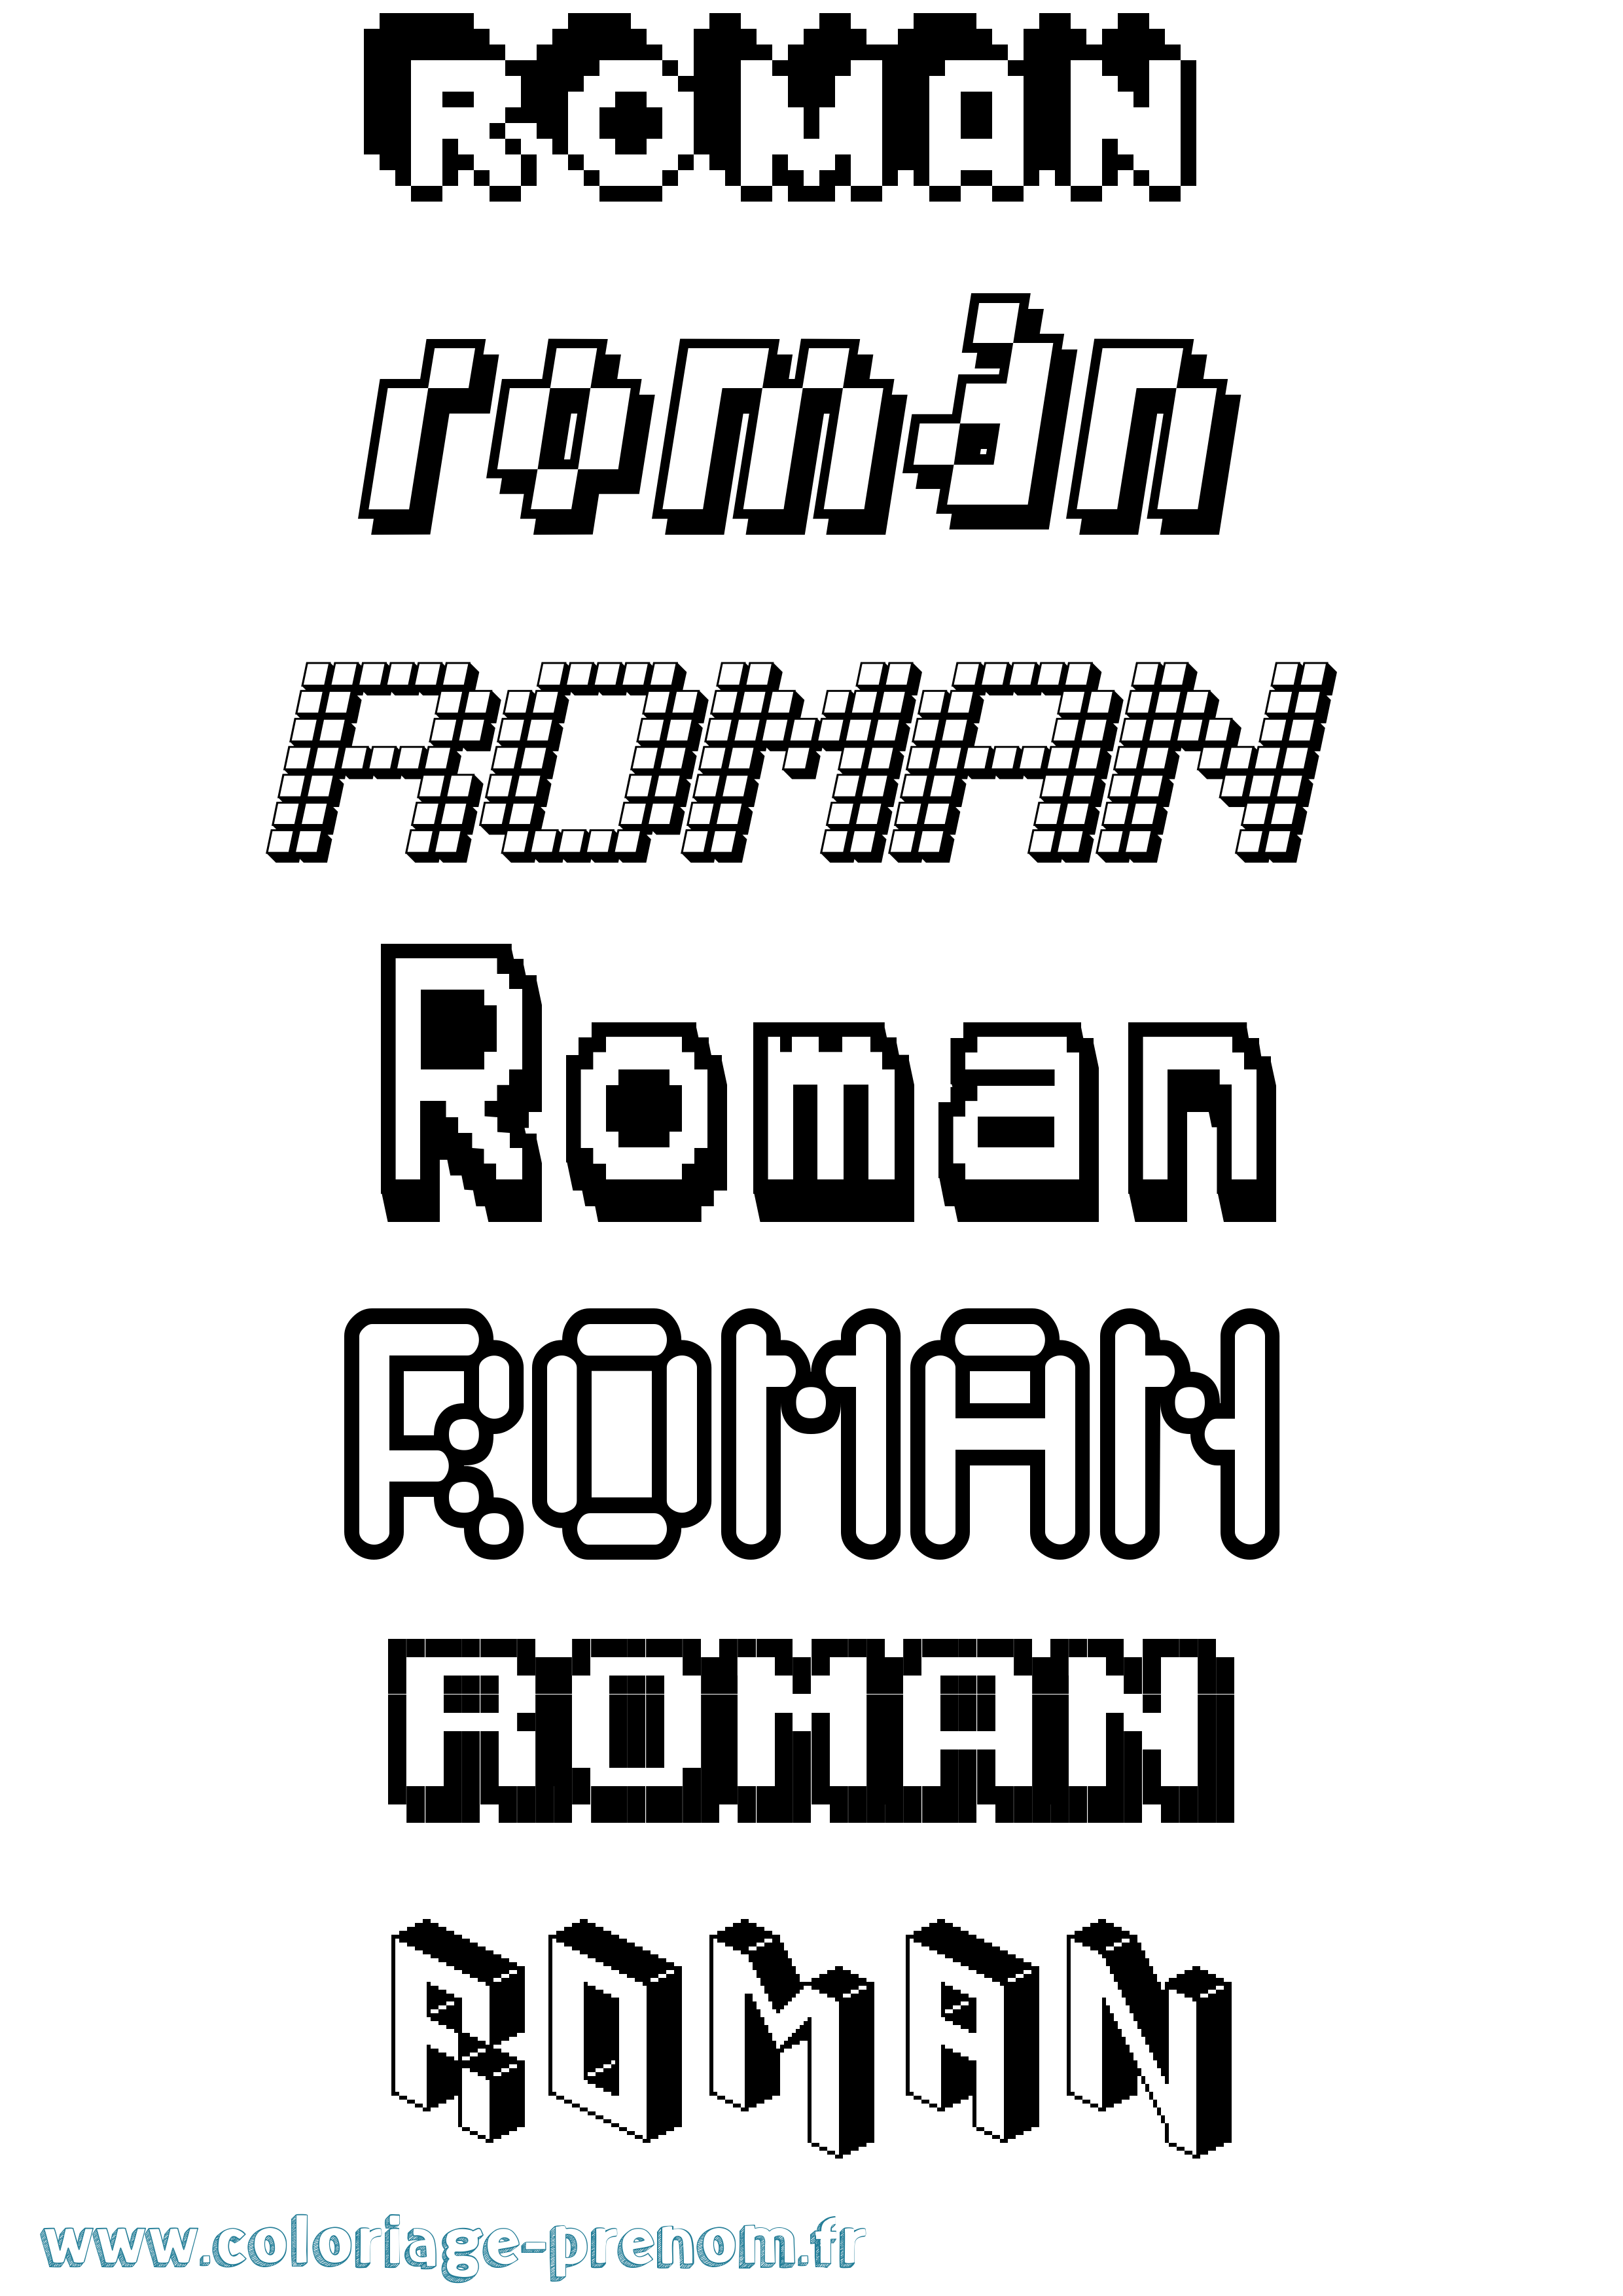 Coloriage prénom Roman Pixel